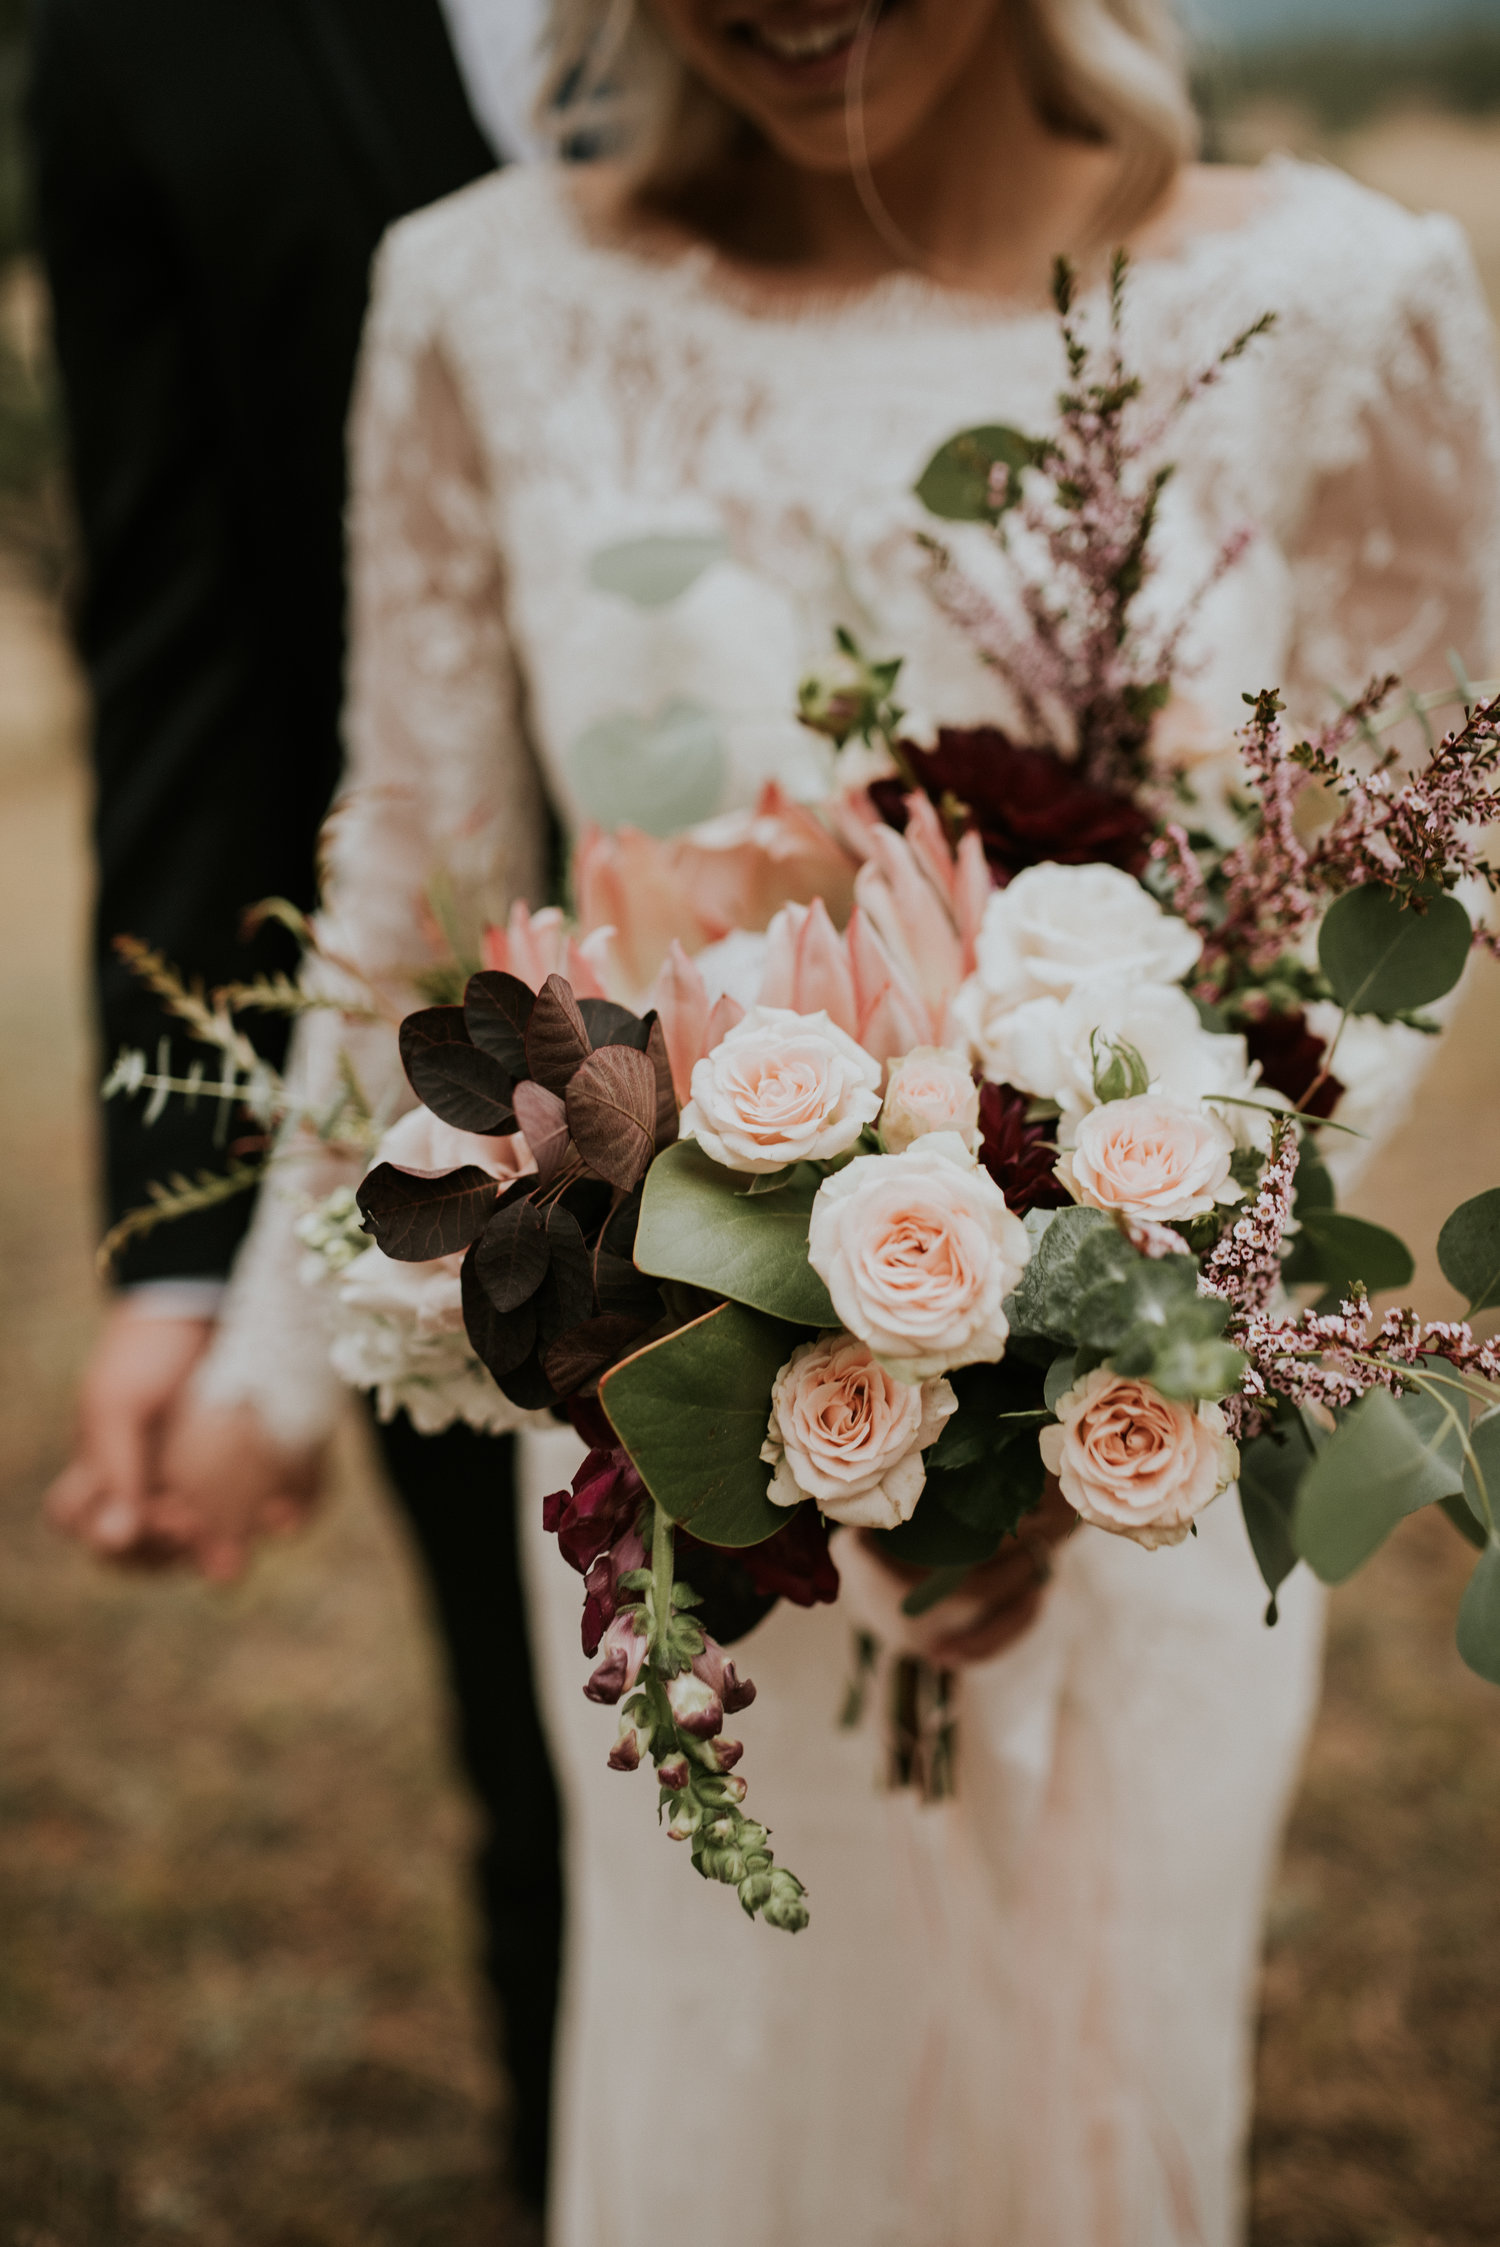 As rosas ficam incríveis em diferentes estilos de bouquets de noiva | Créditos: Lace and Lillies Flowers